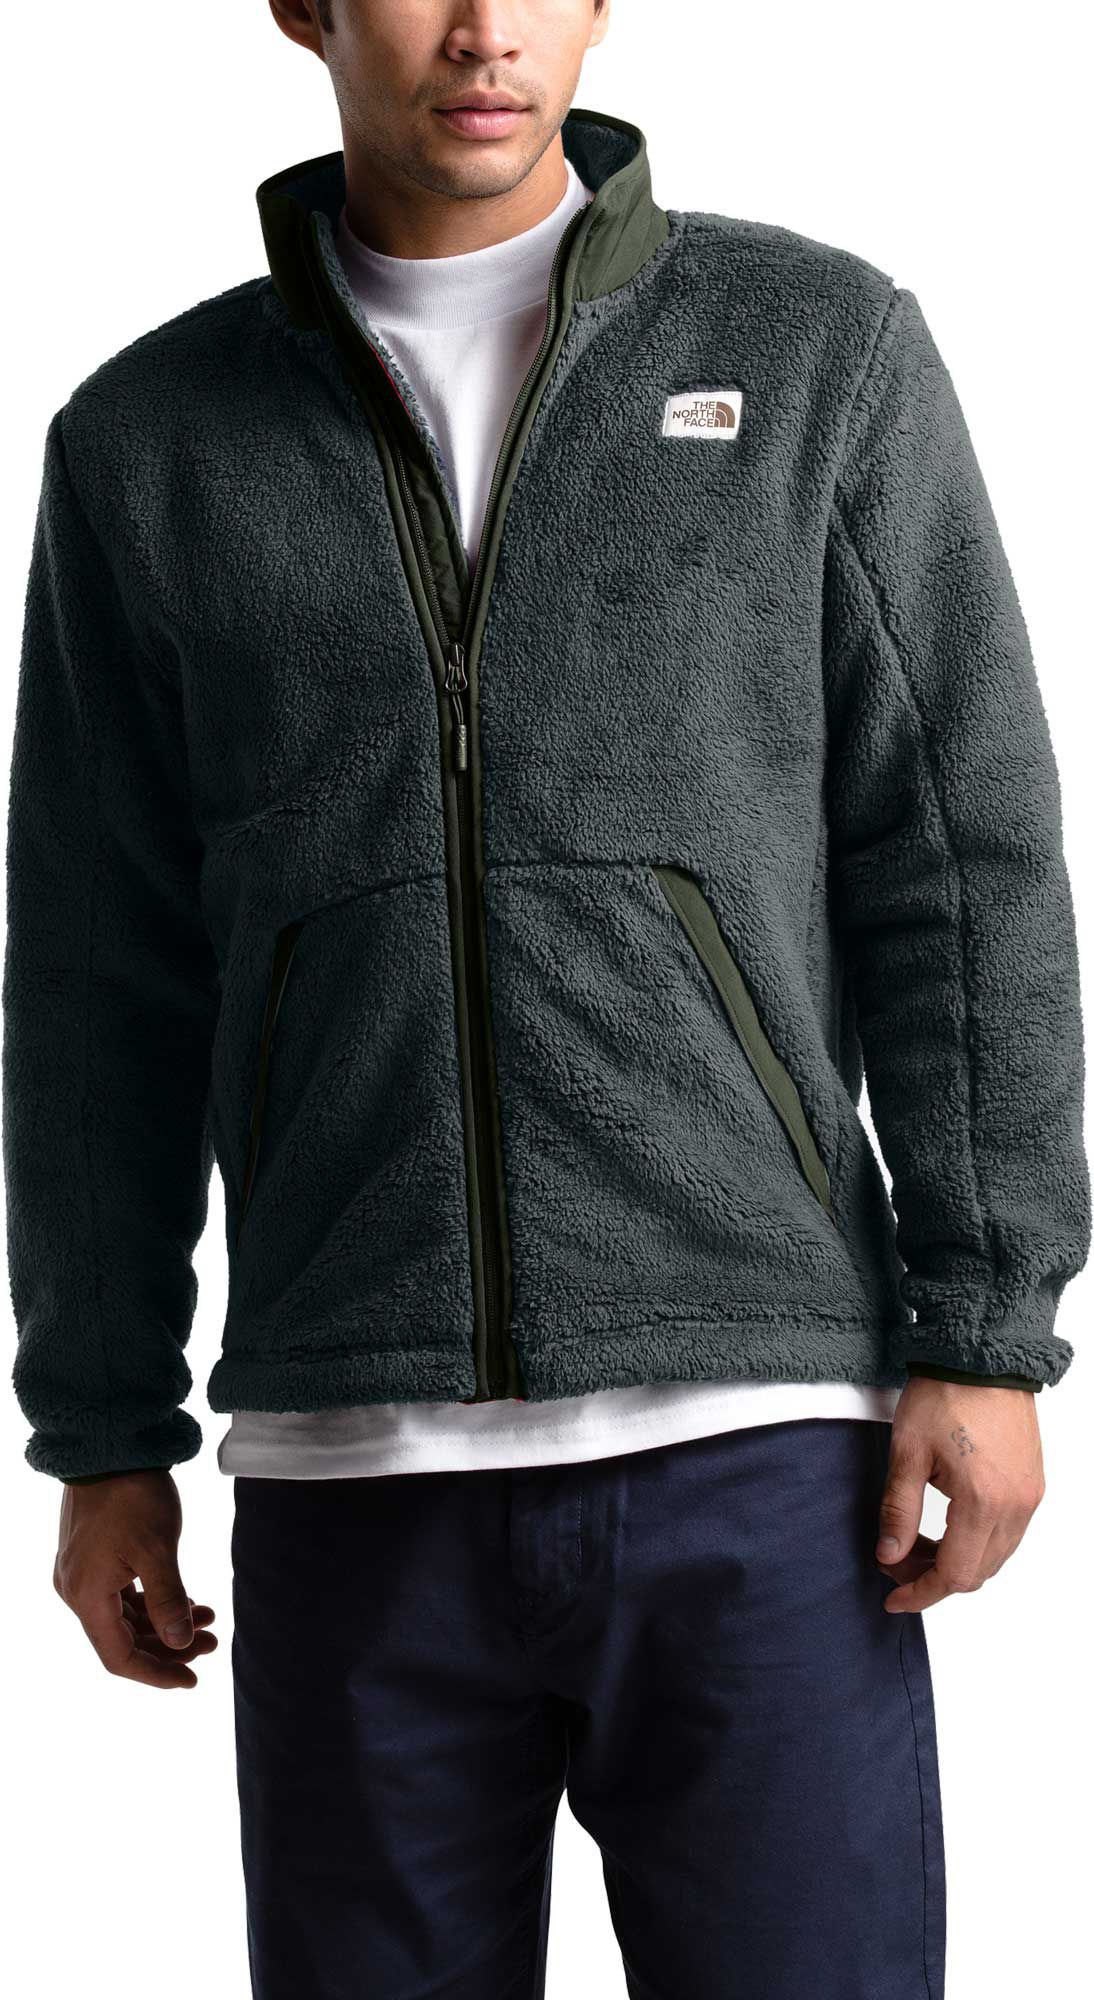 grey puffer jacket with hood